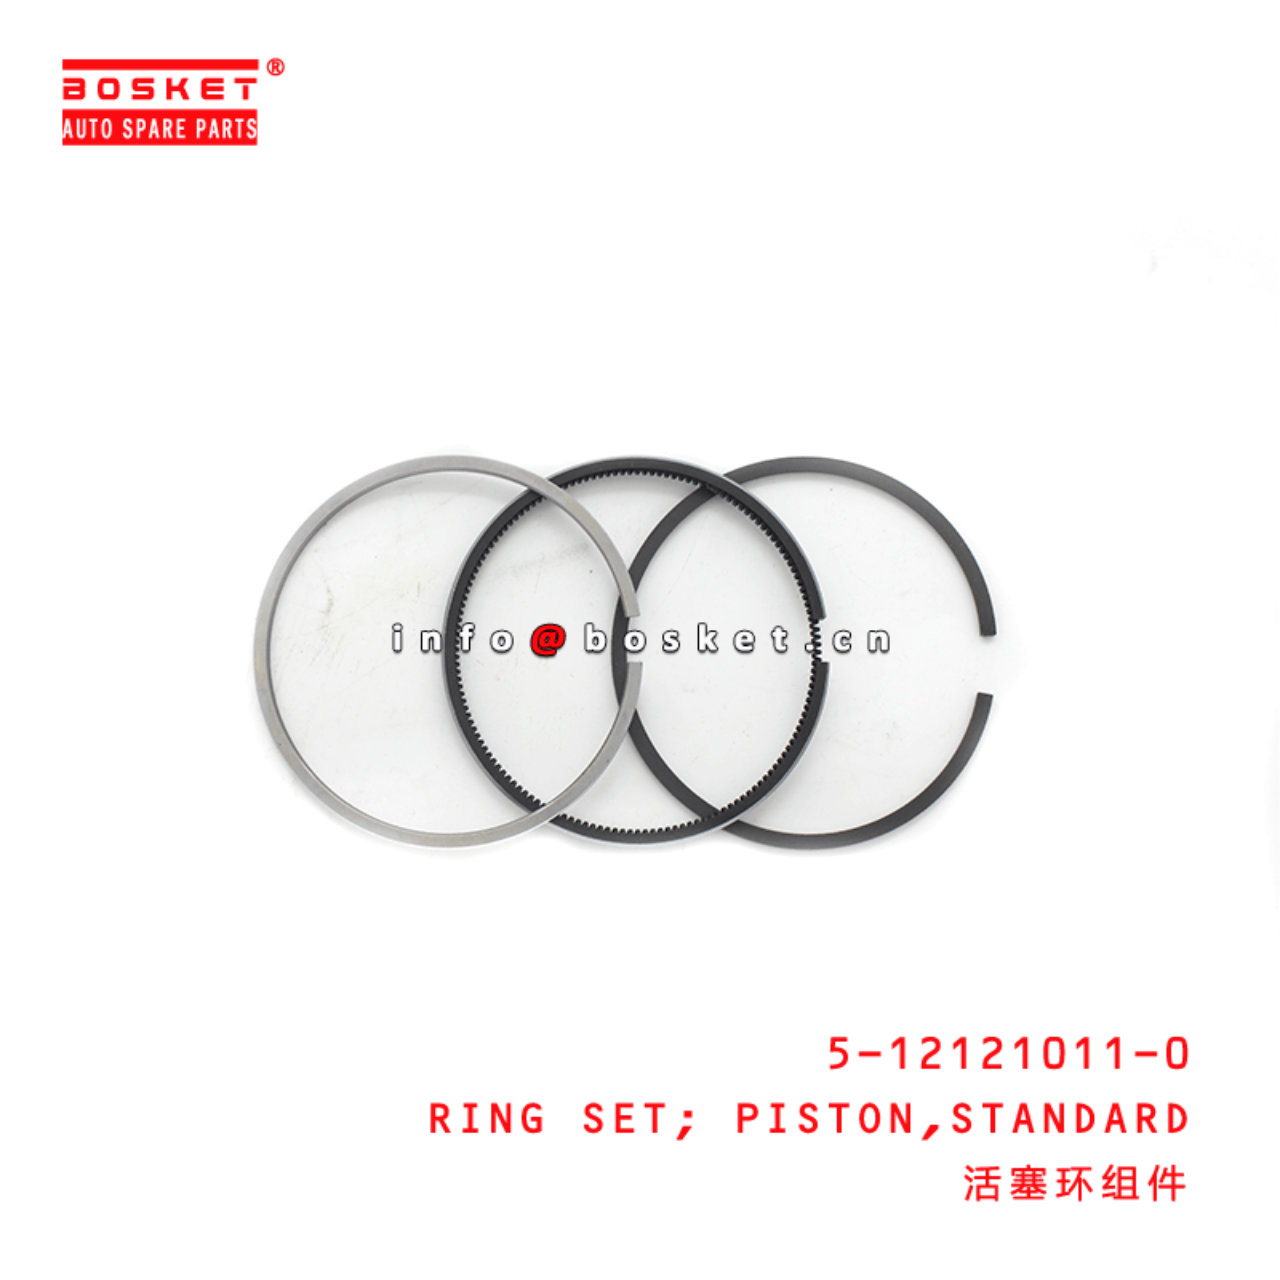 5-12121011-0 5121210110 Standard Piston Ring Set Suitable for ISUZU 3AE1 